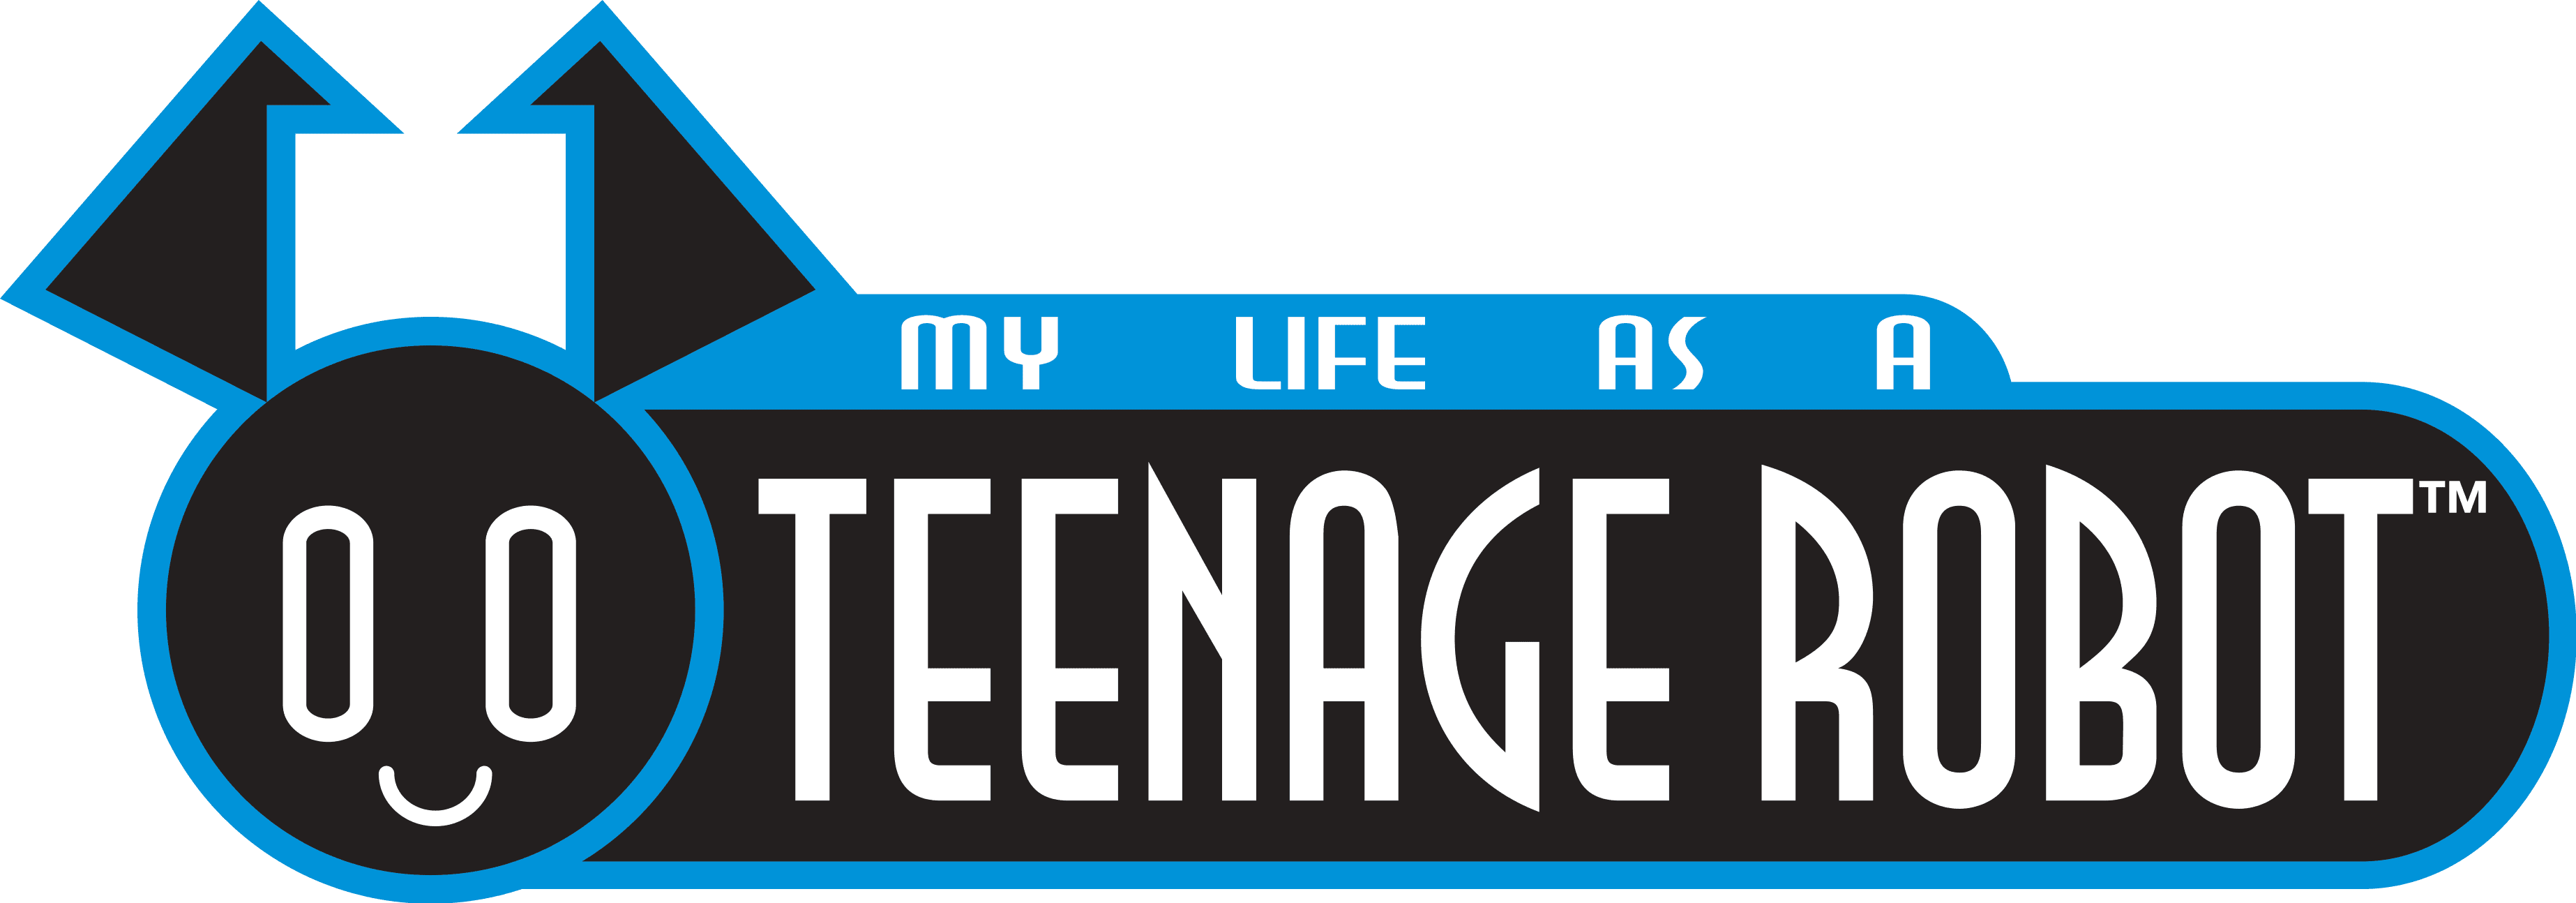 My Life as a Teenage Robot logo